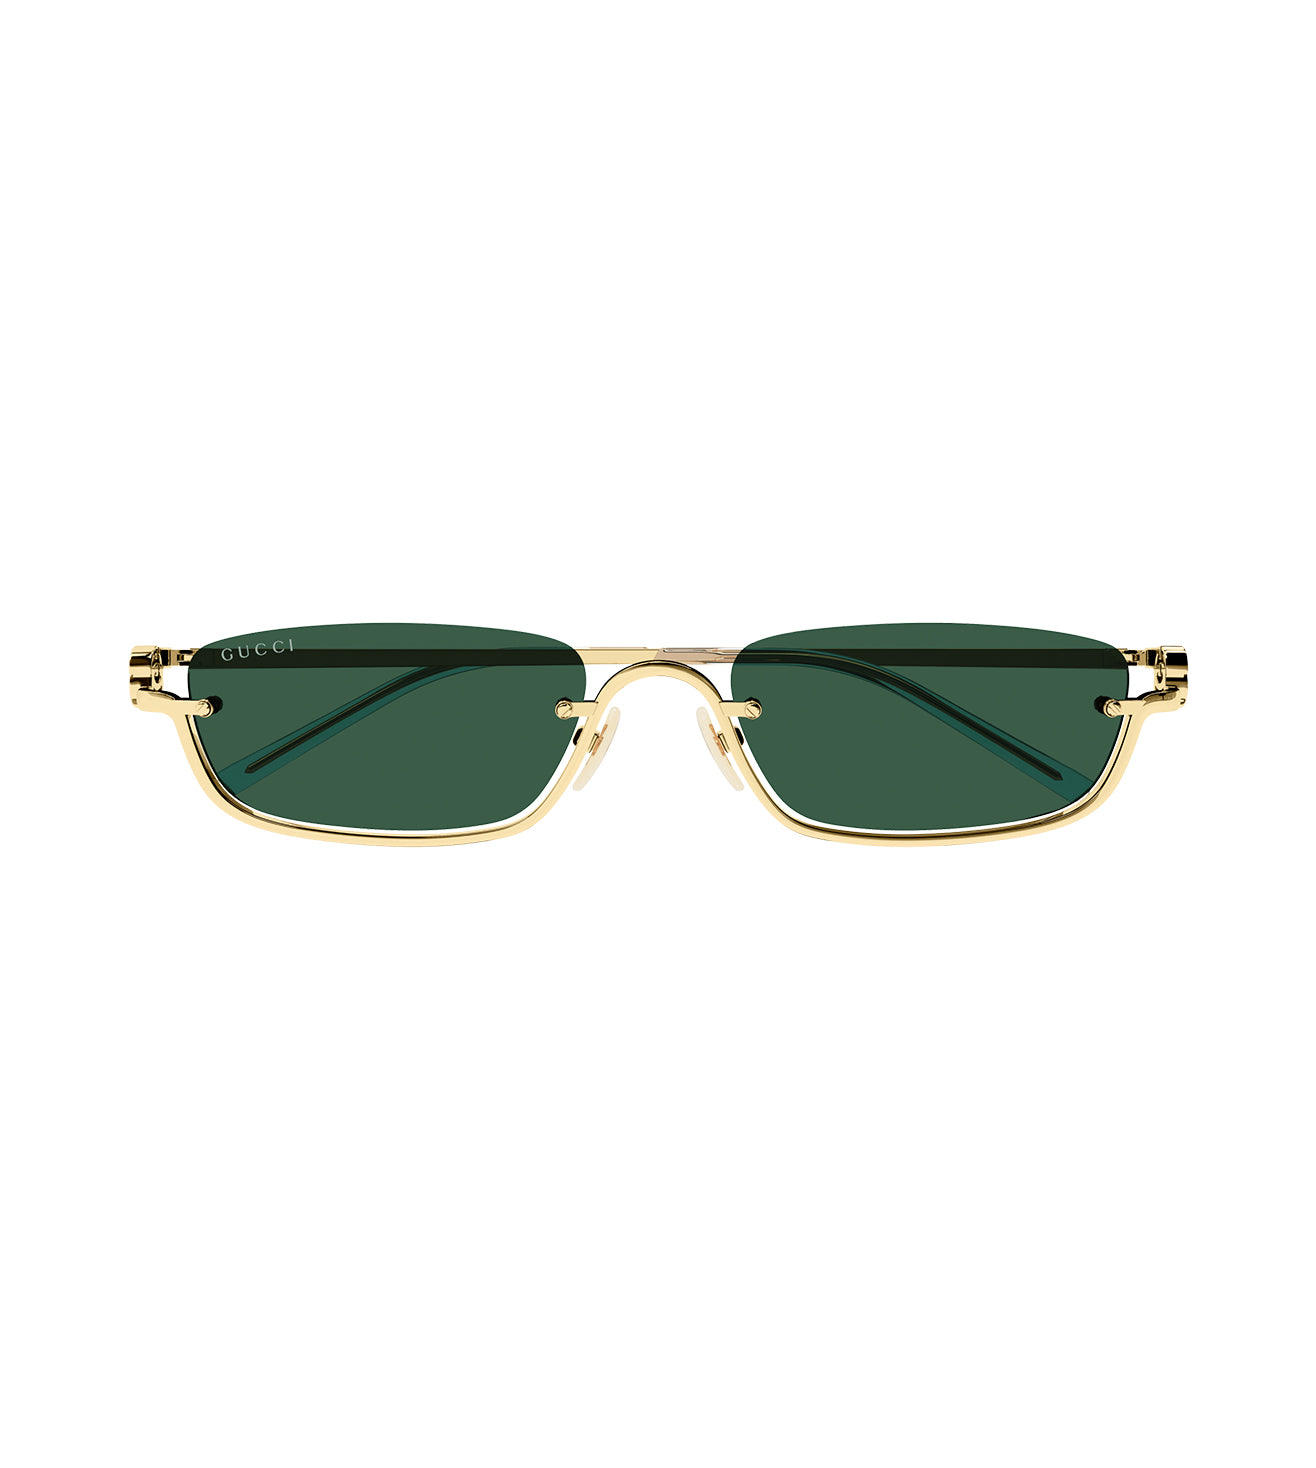 Gucci Unisex Green Oval Sunglasses